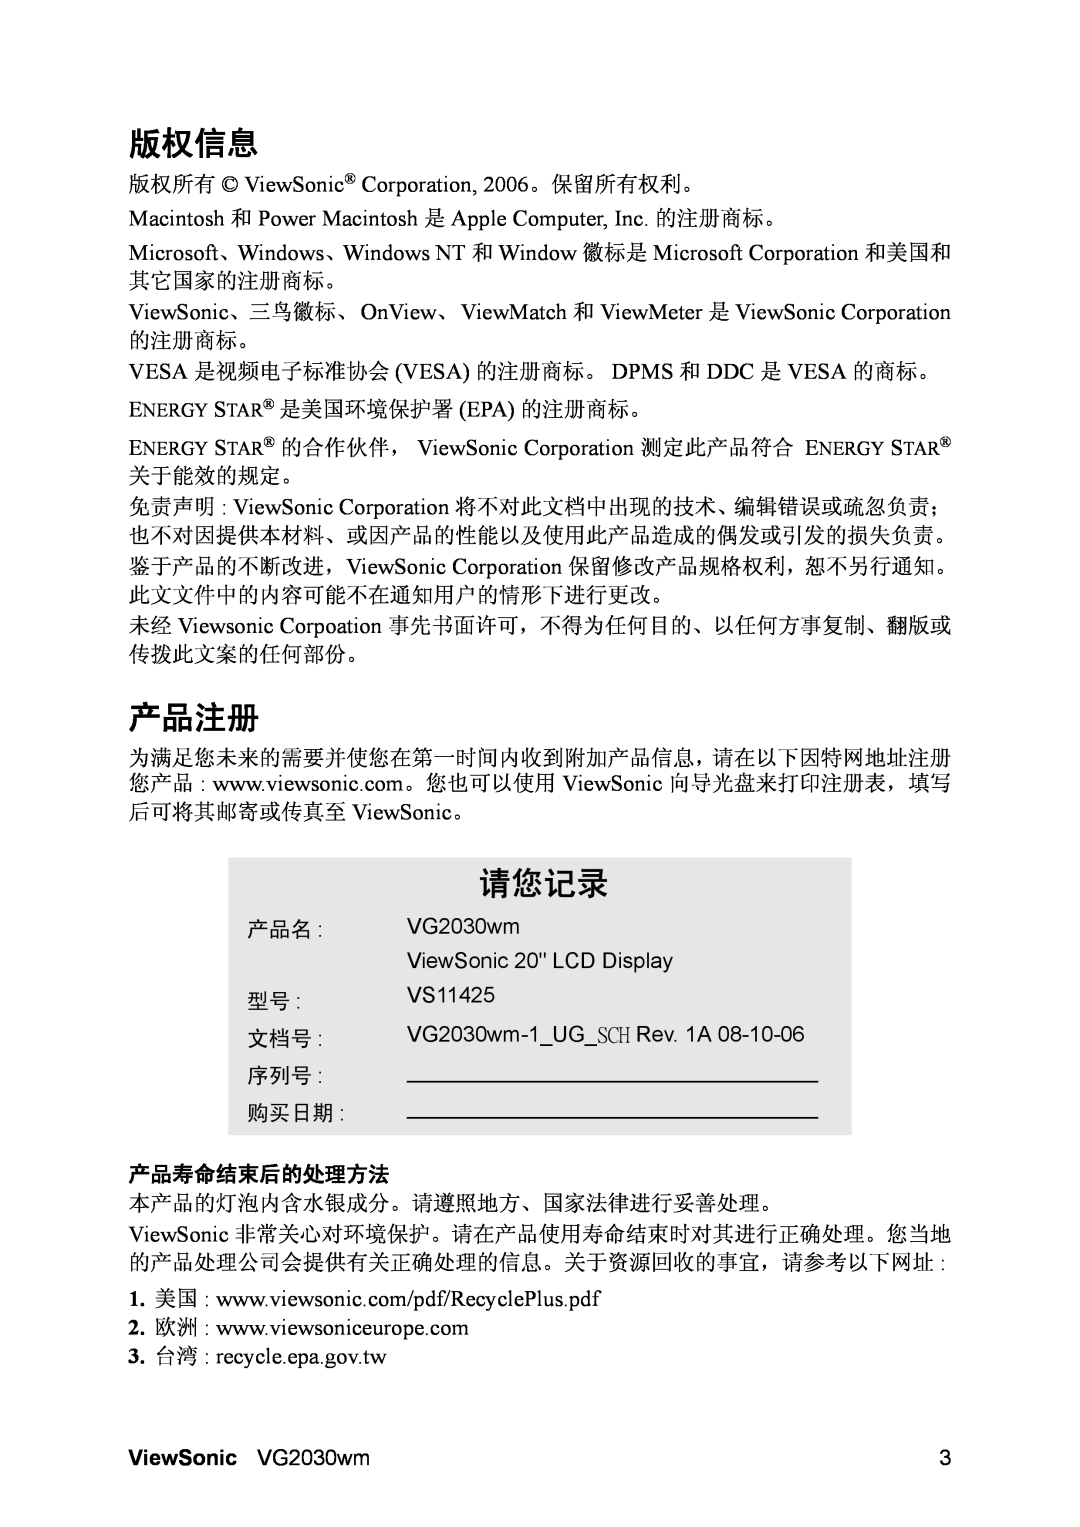 ViewSonic VS11425 manual 版权信息, 产品注册, 请您记录, 3.台湾 recycle.epa.gov.tw, 产品寿命结束后的处理方法, ViewSonic VG2030wm 